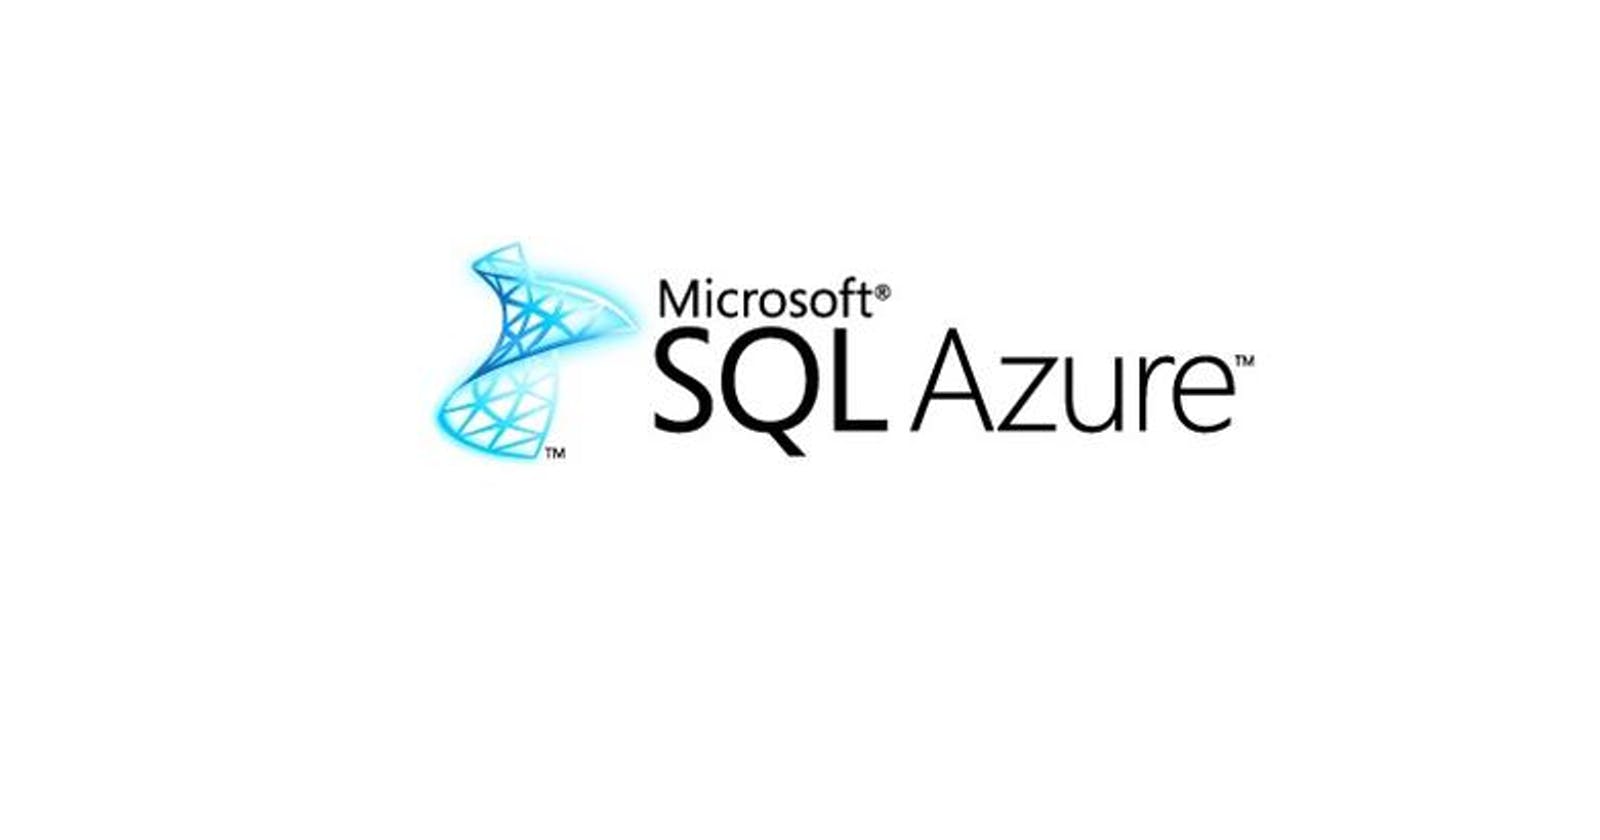 Microsoft Azure : AzureSQL an effective solution for small companies